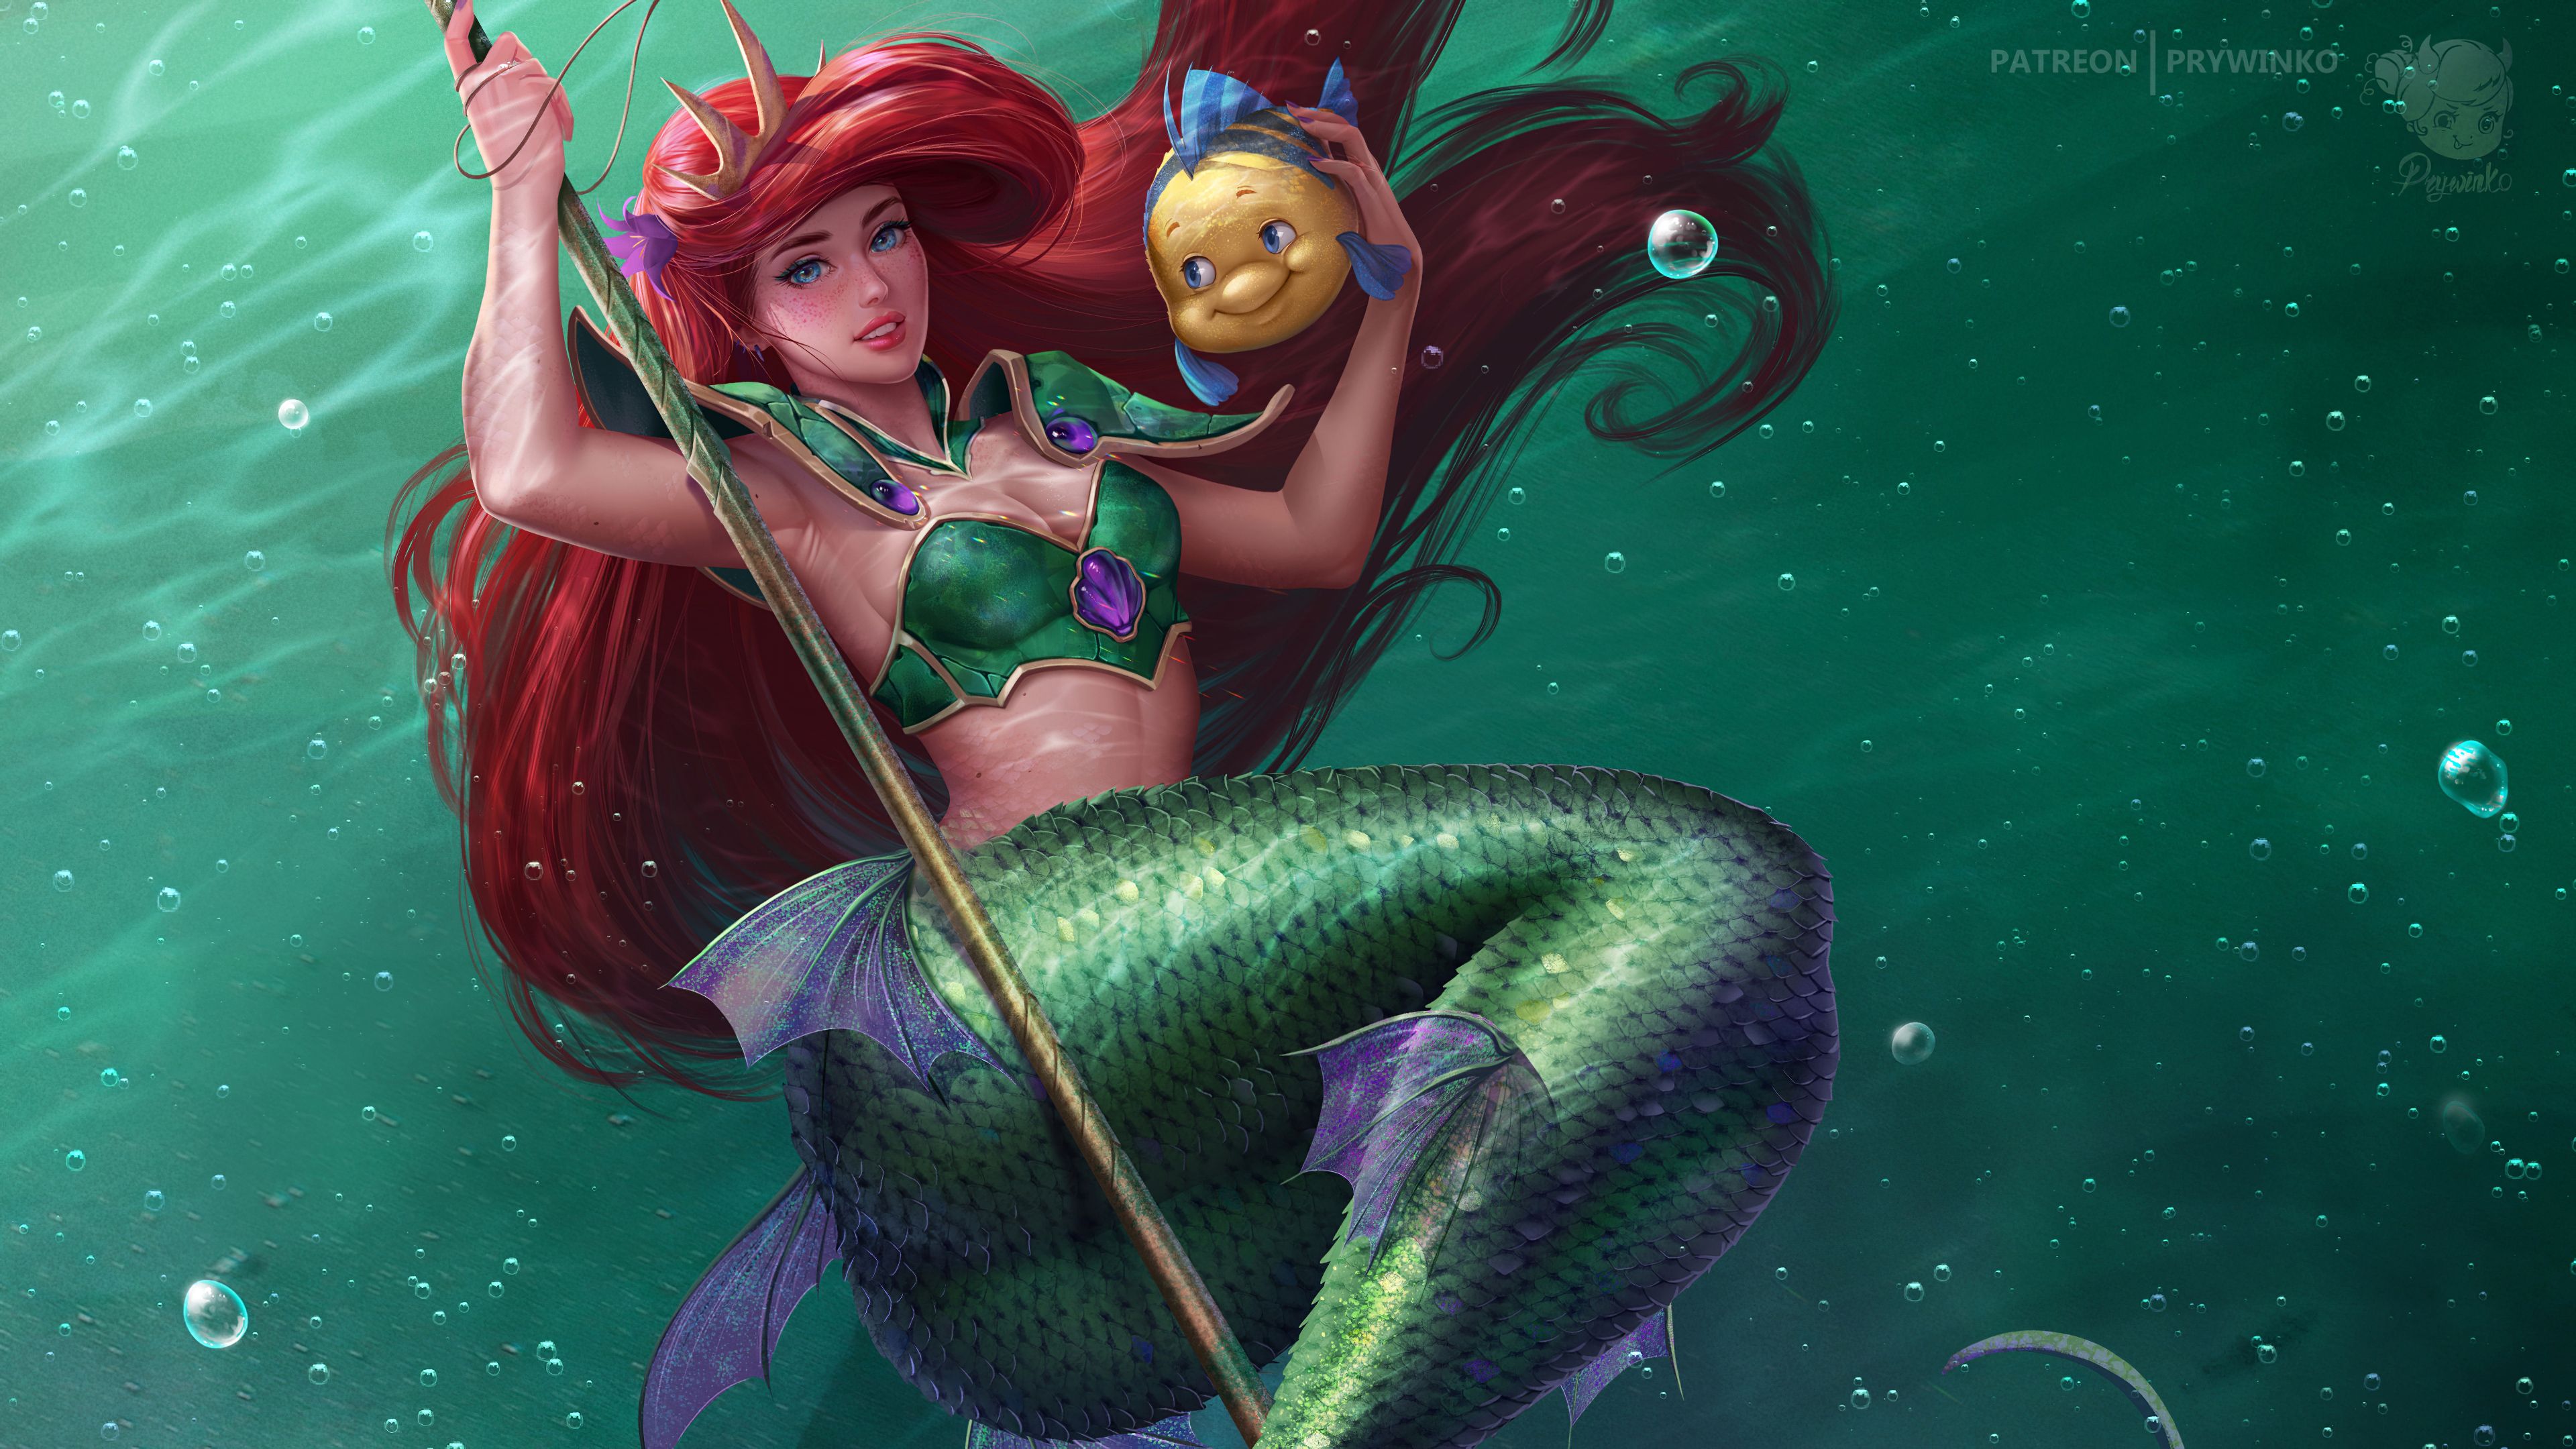 The Little Mermaid 4k Ultra HD Wallpaper. Background Image